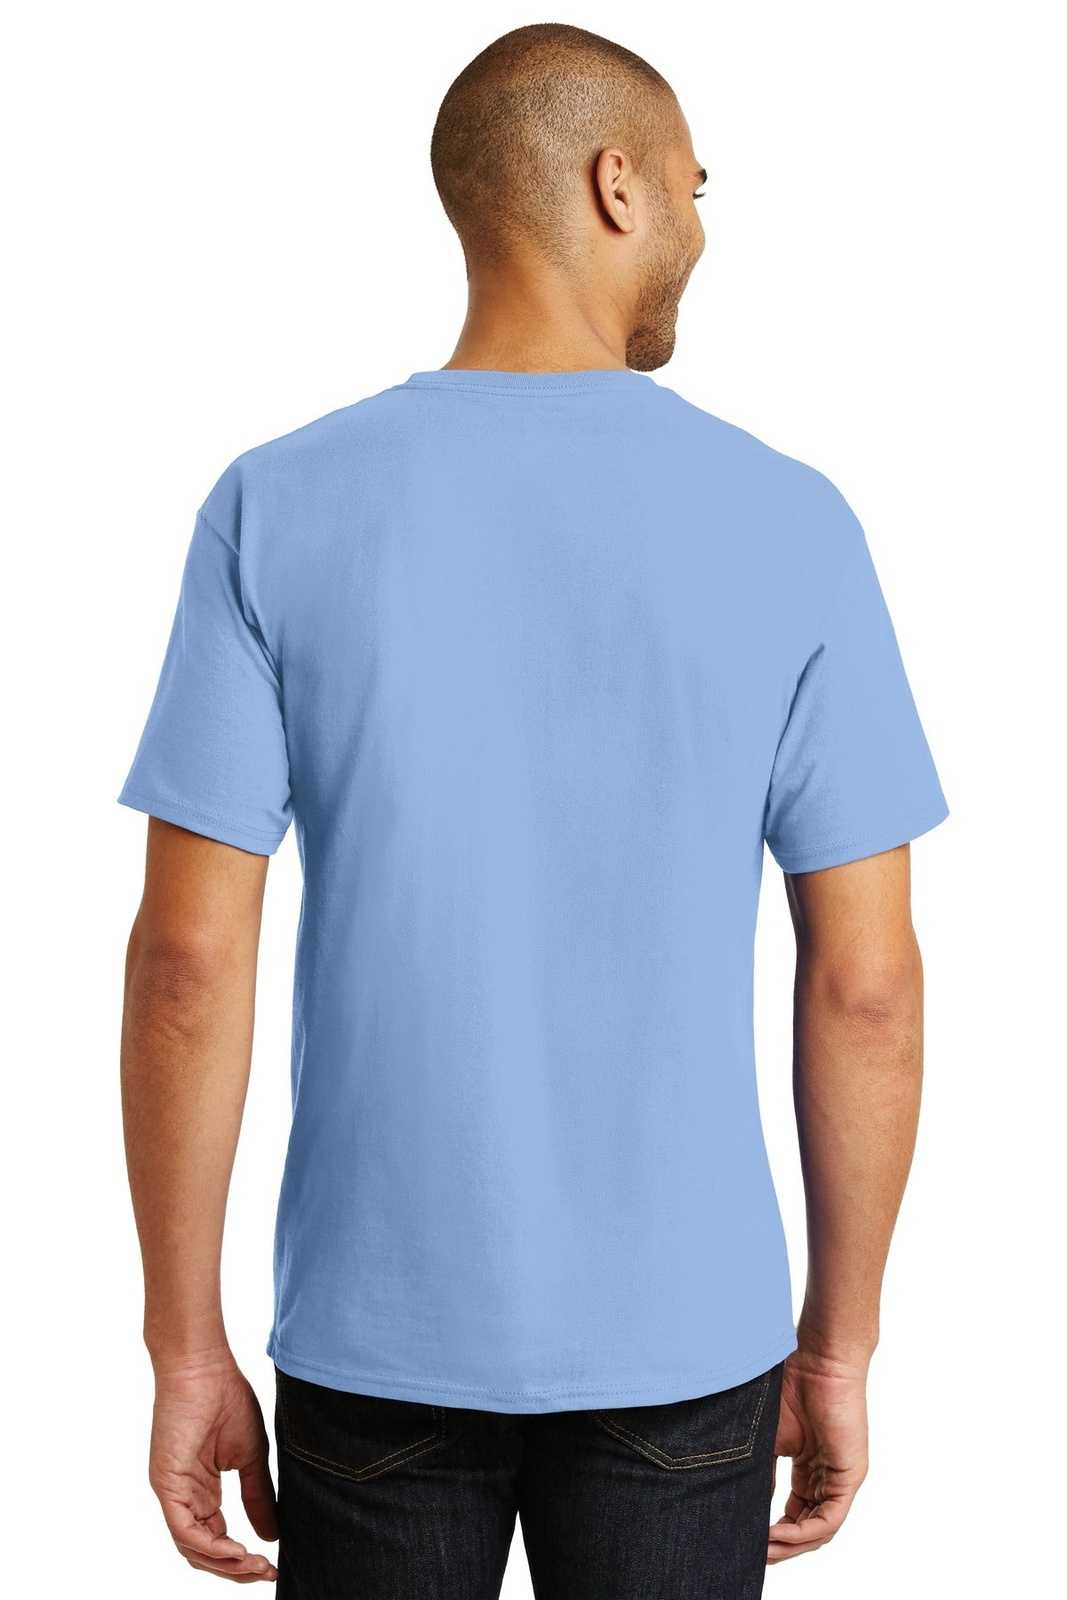 Hanes 5250 Tagless 100% Cotton T-Shirt - Light Blue - HIT a Double